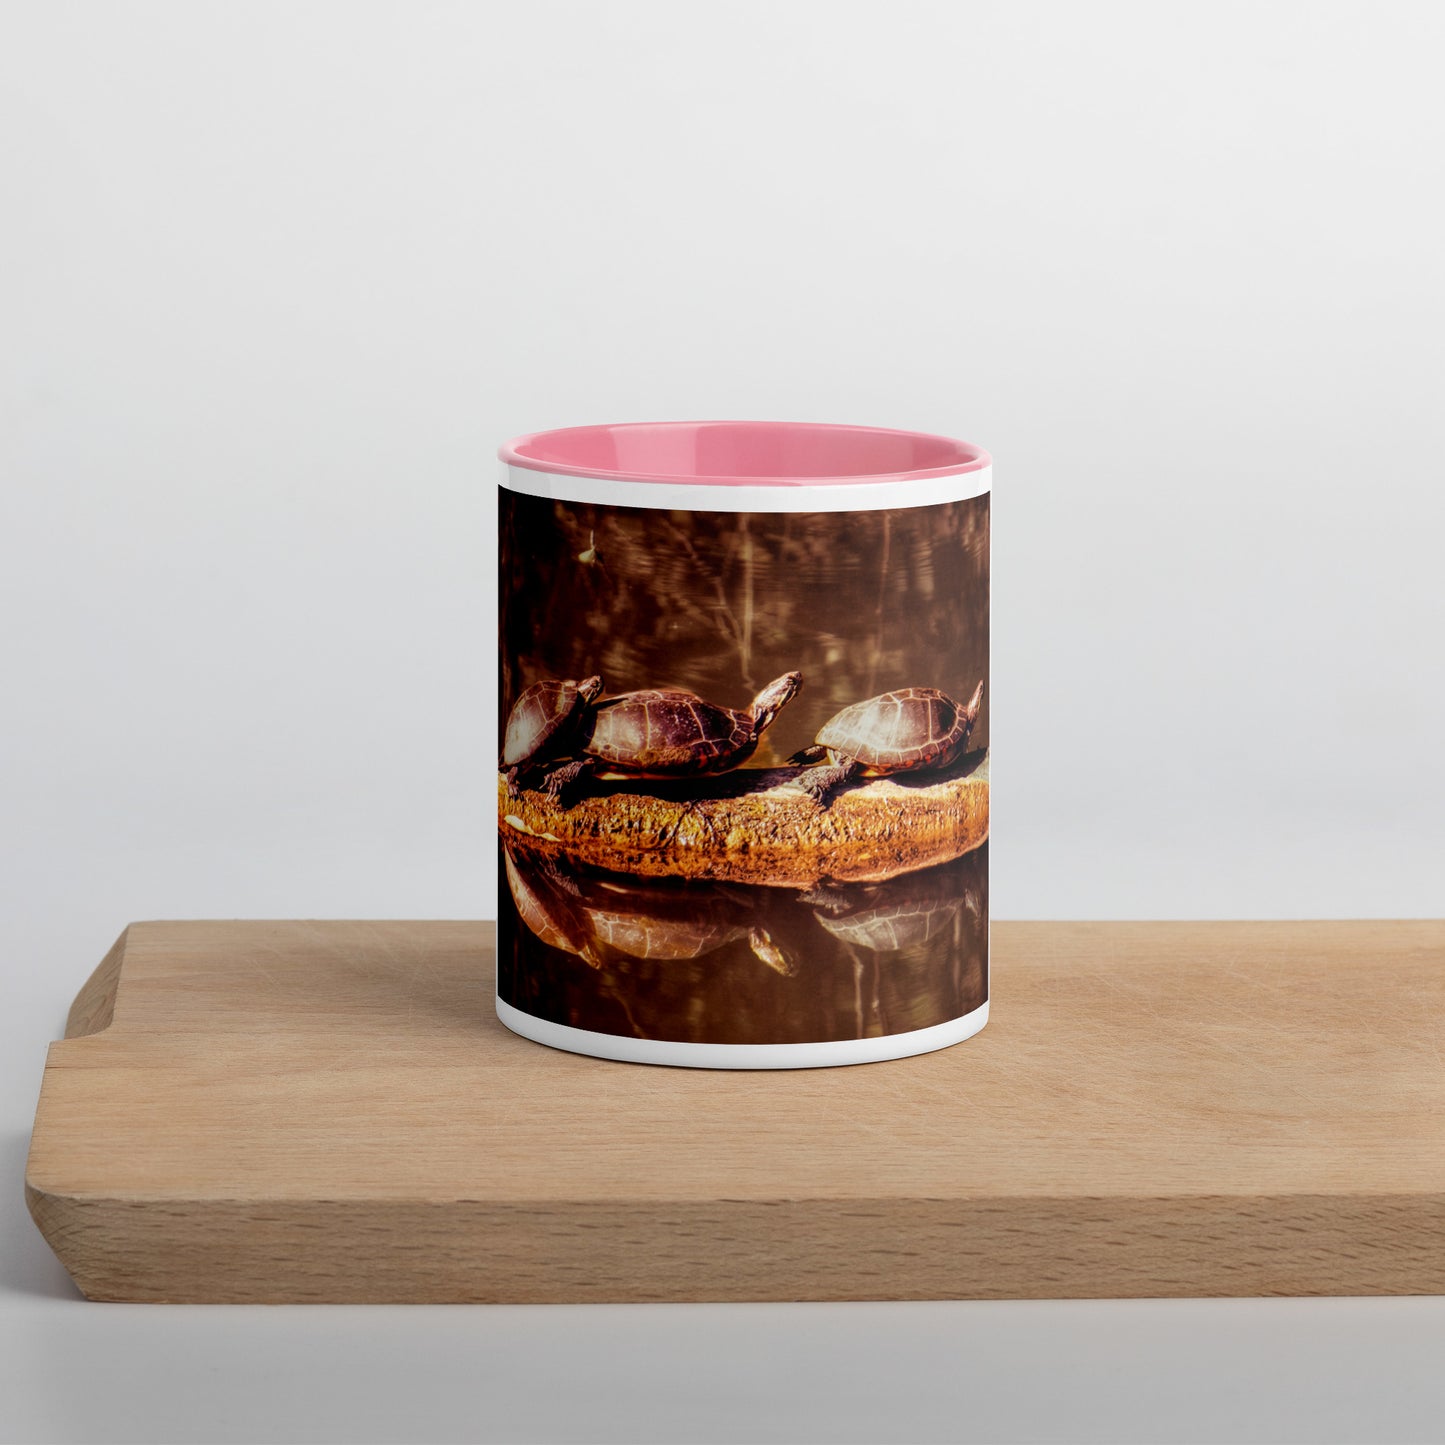 3 Turtle Coffee Mug Gift Idea